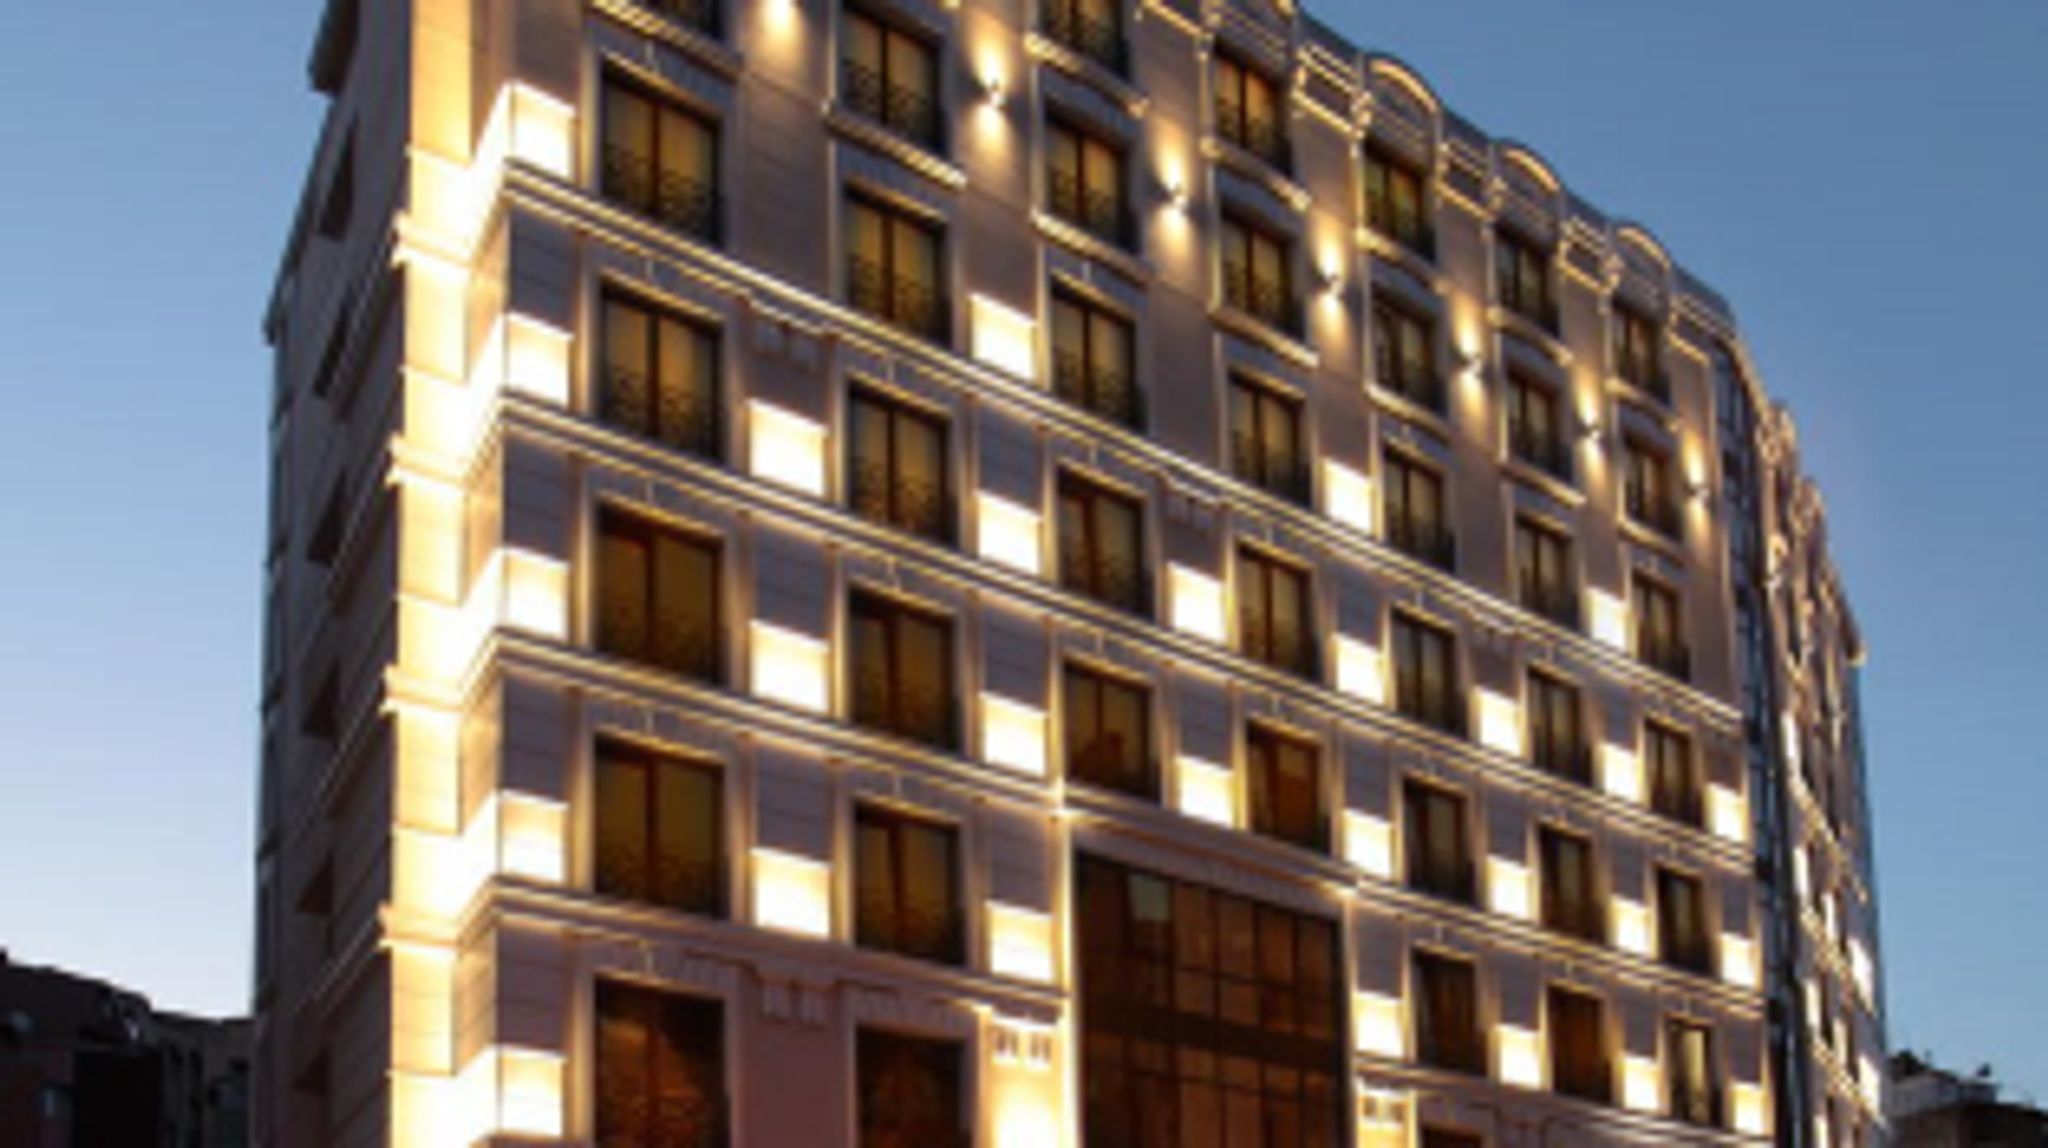 Istanbul Dora Hotel